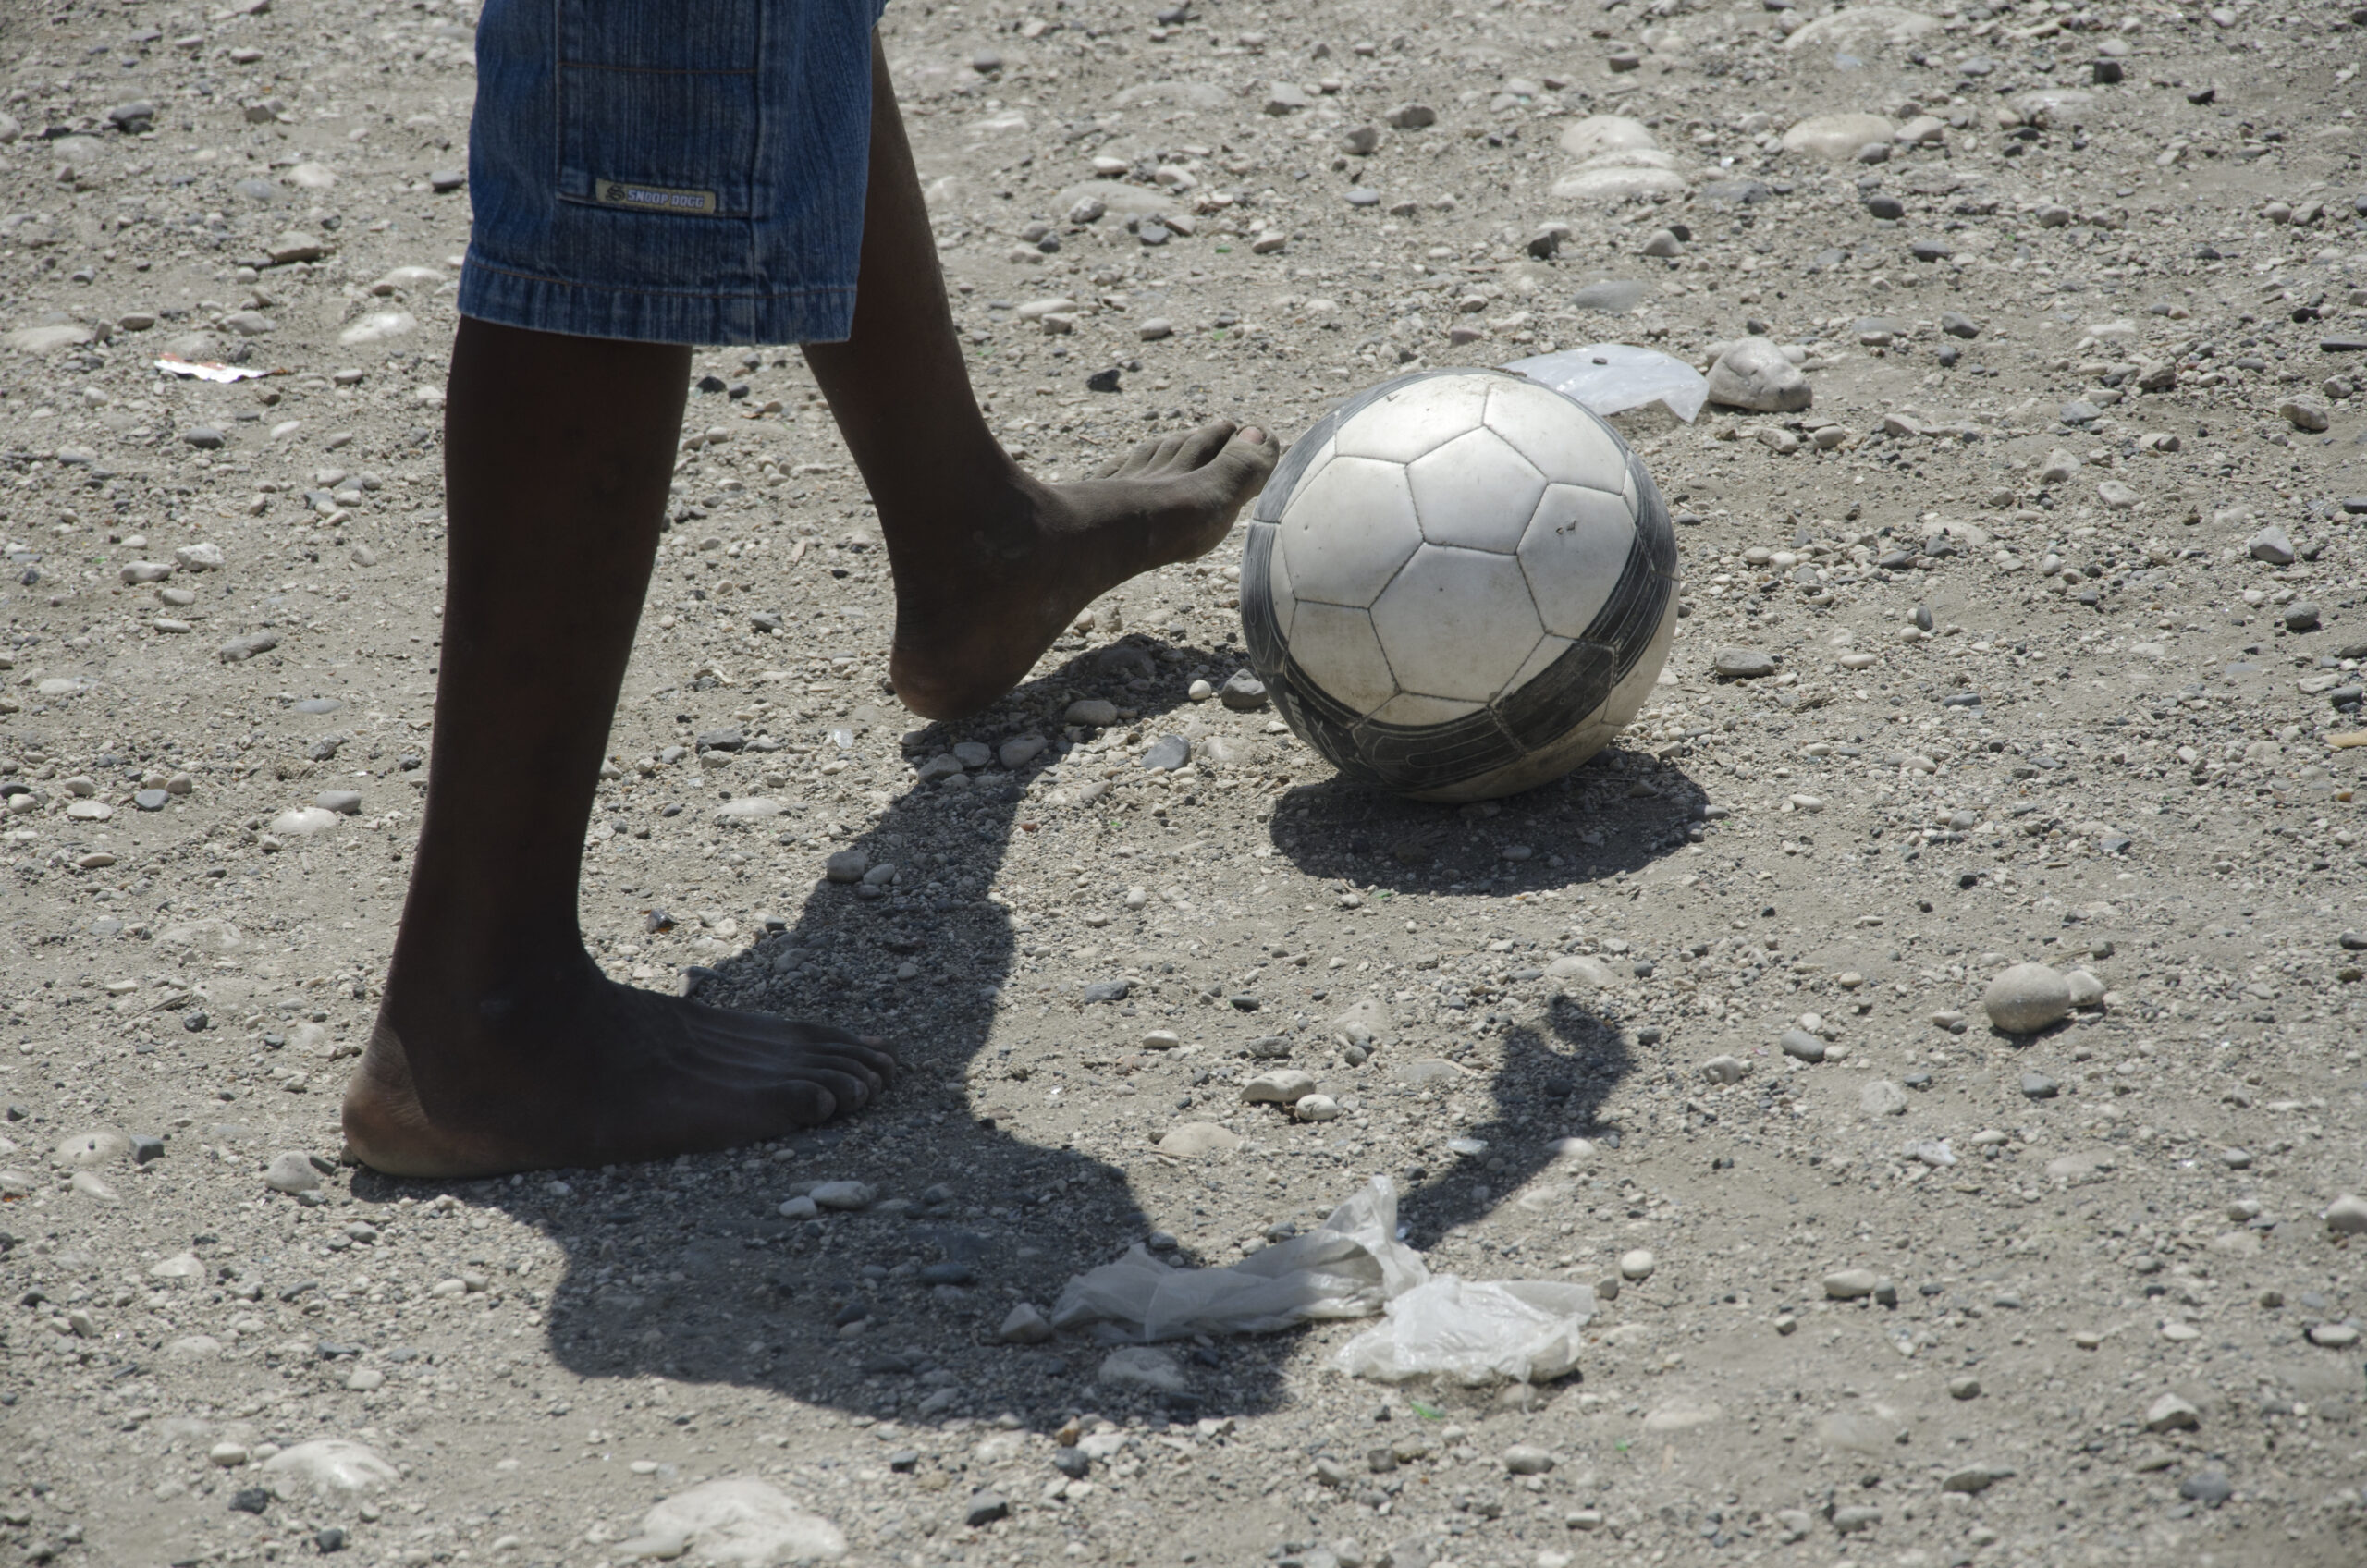 Image of bare feet kicking a soccer ball.